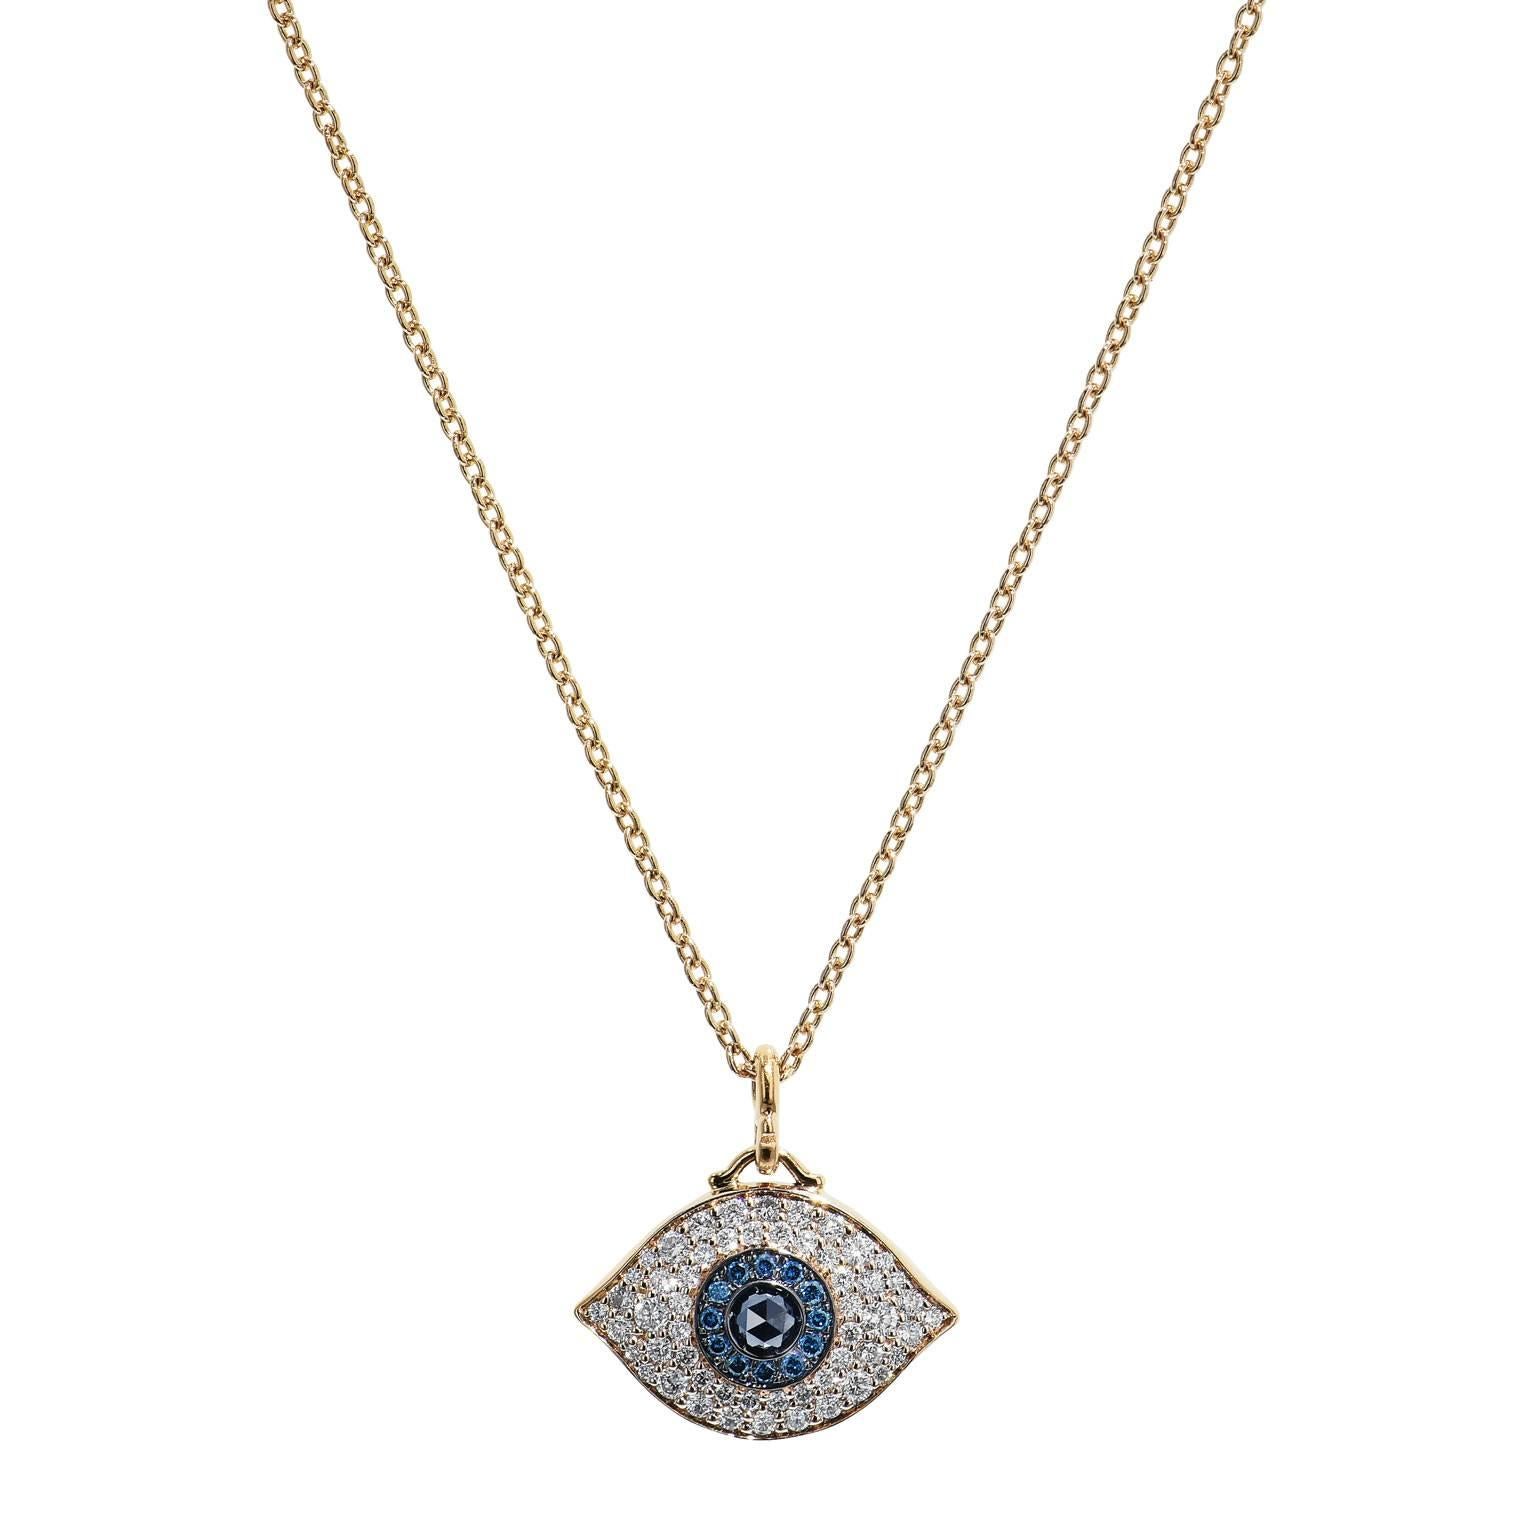 14 Karat Rose Gold Evil Eye Pendant Necklace on Chain